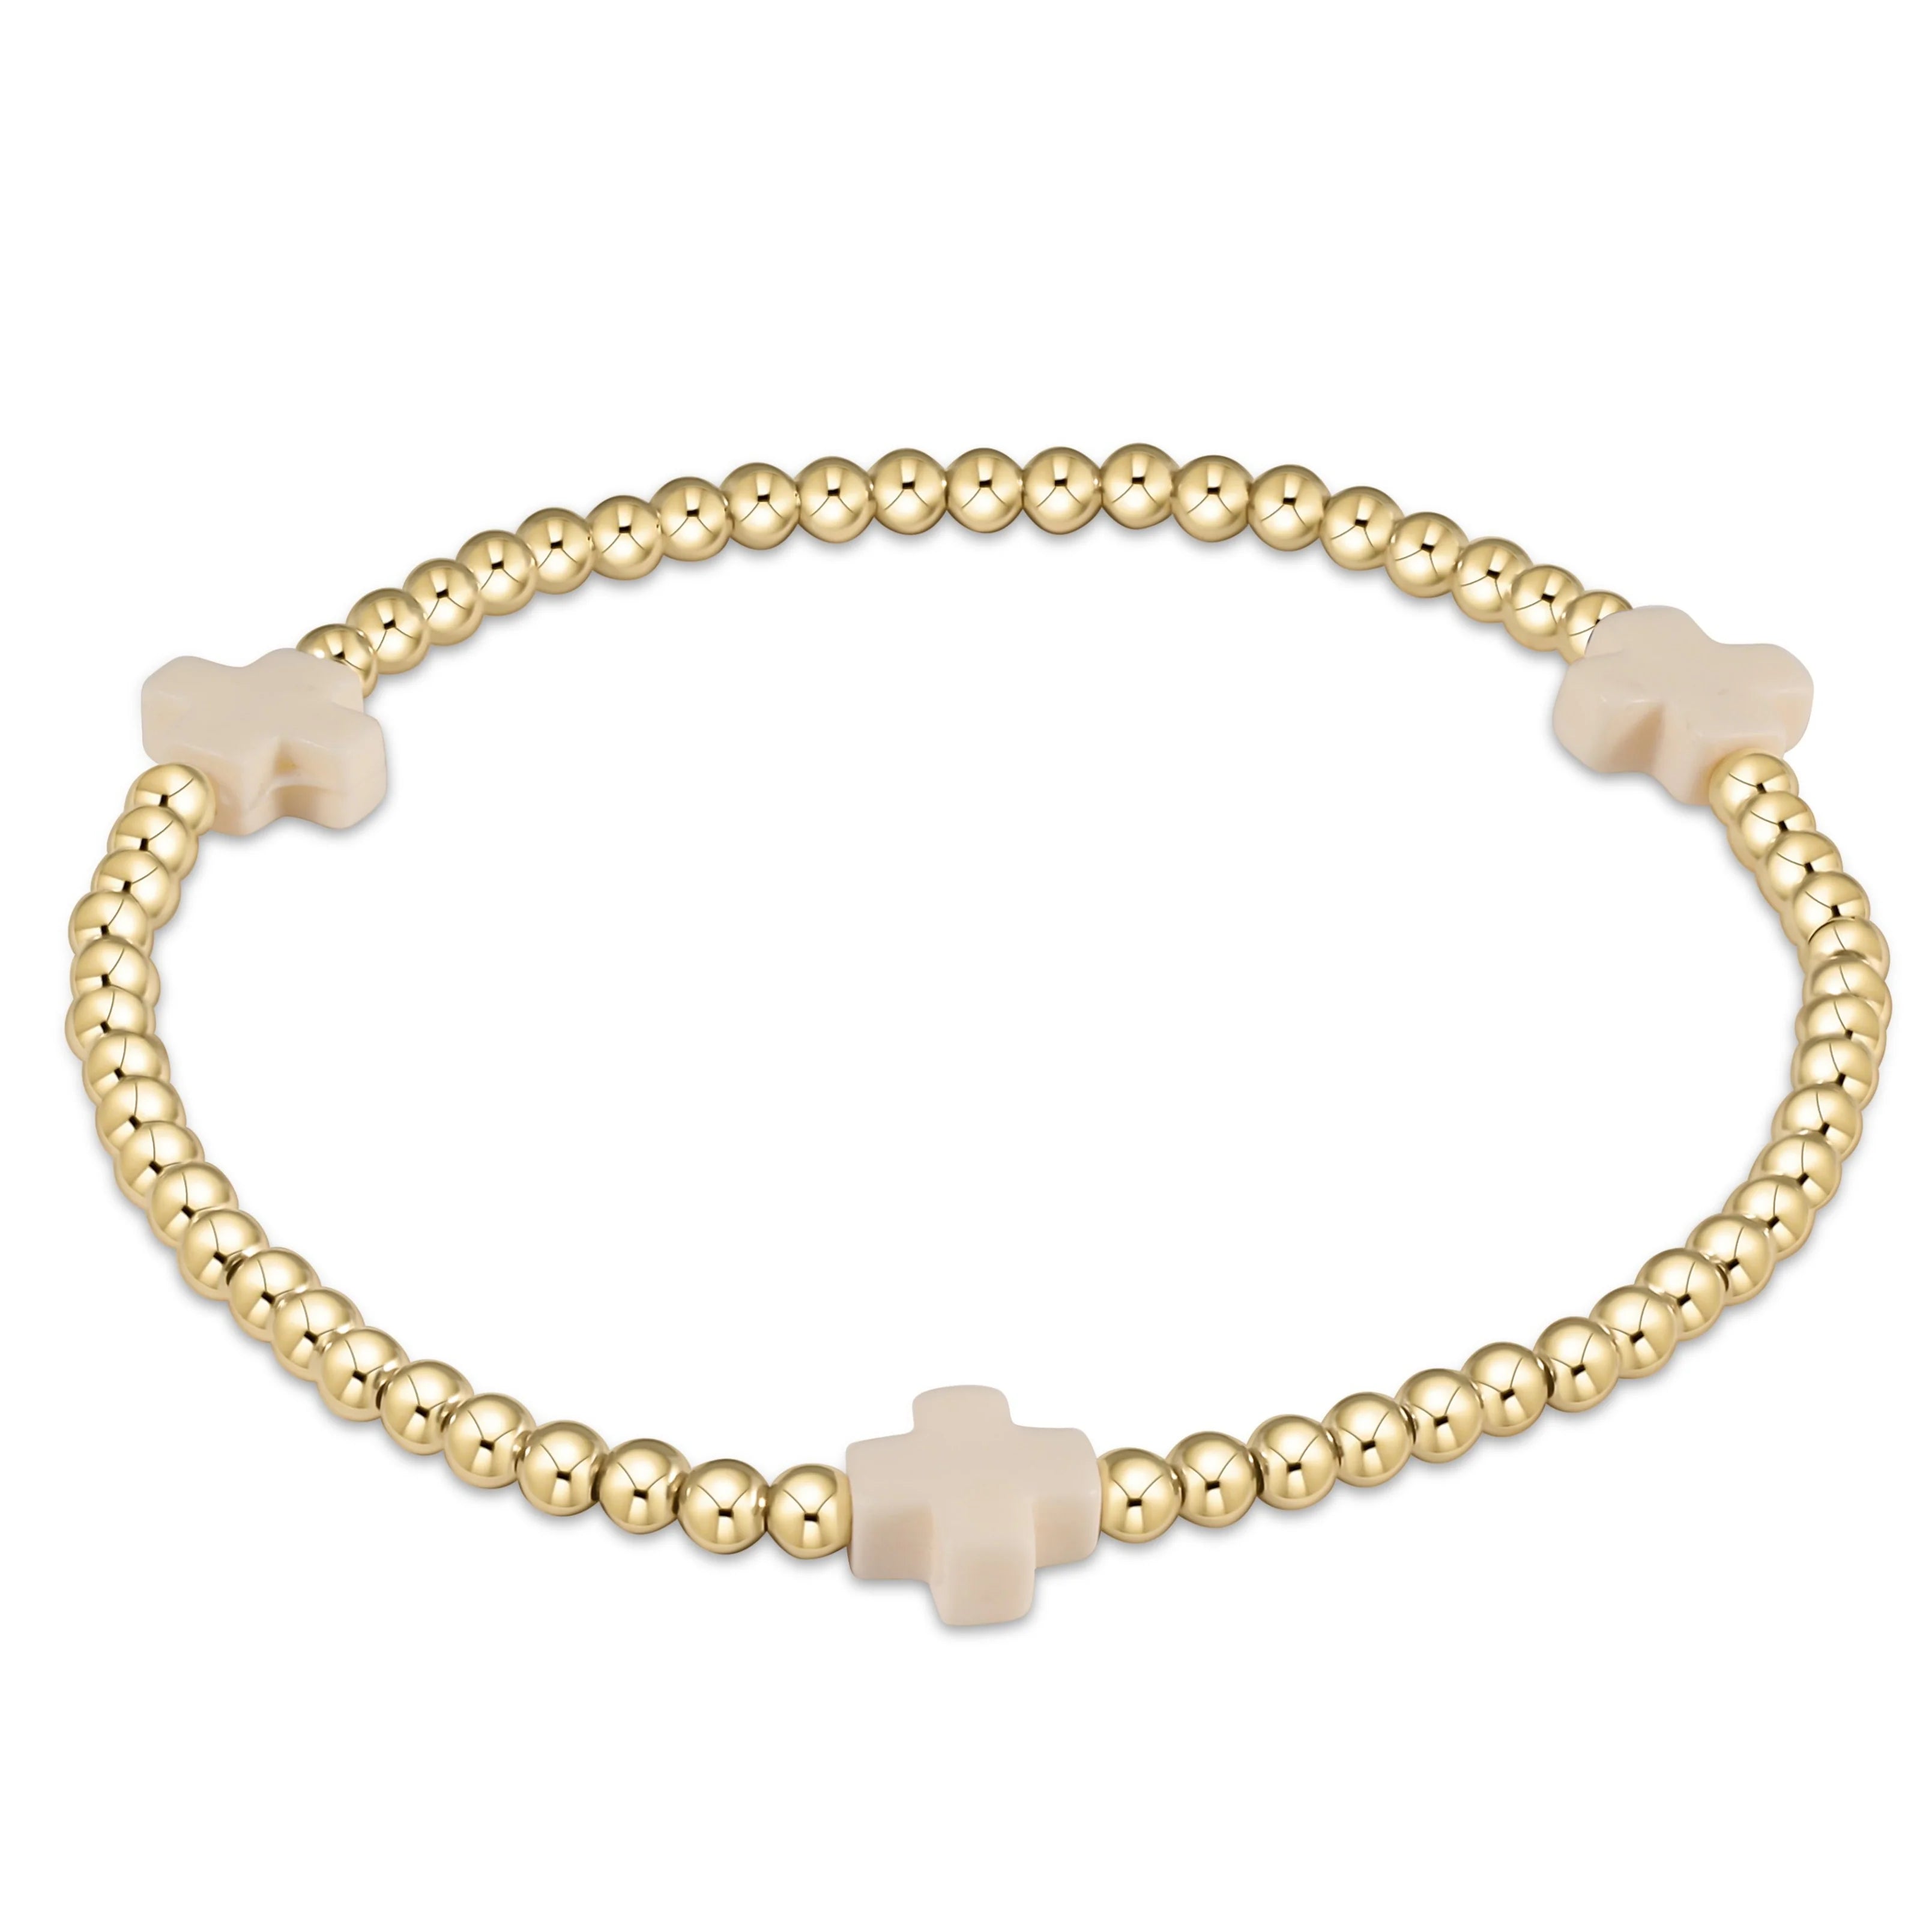 Gold Bead Bracelet with 3 Crosses